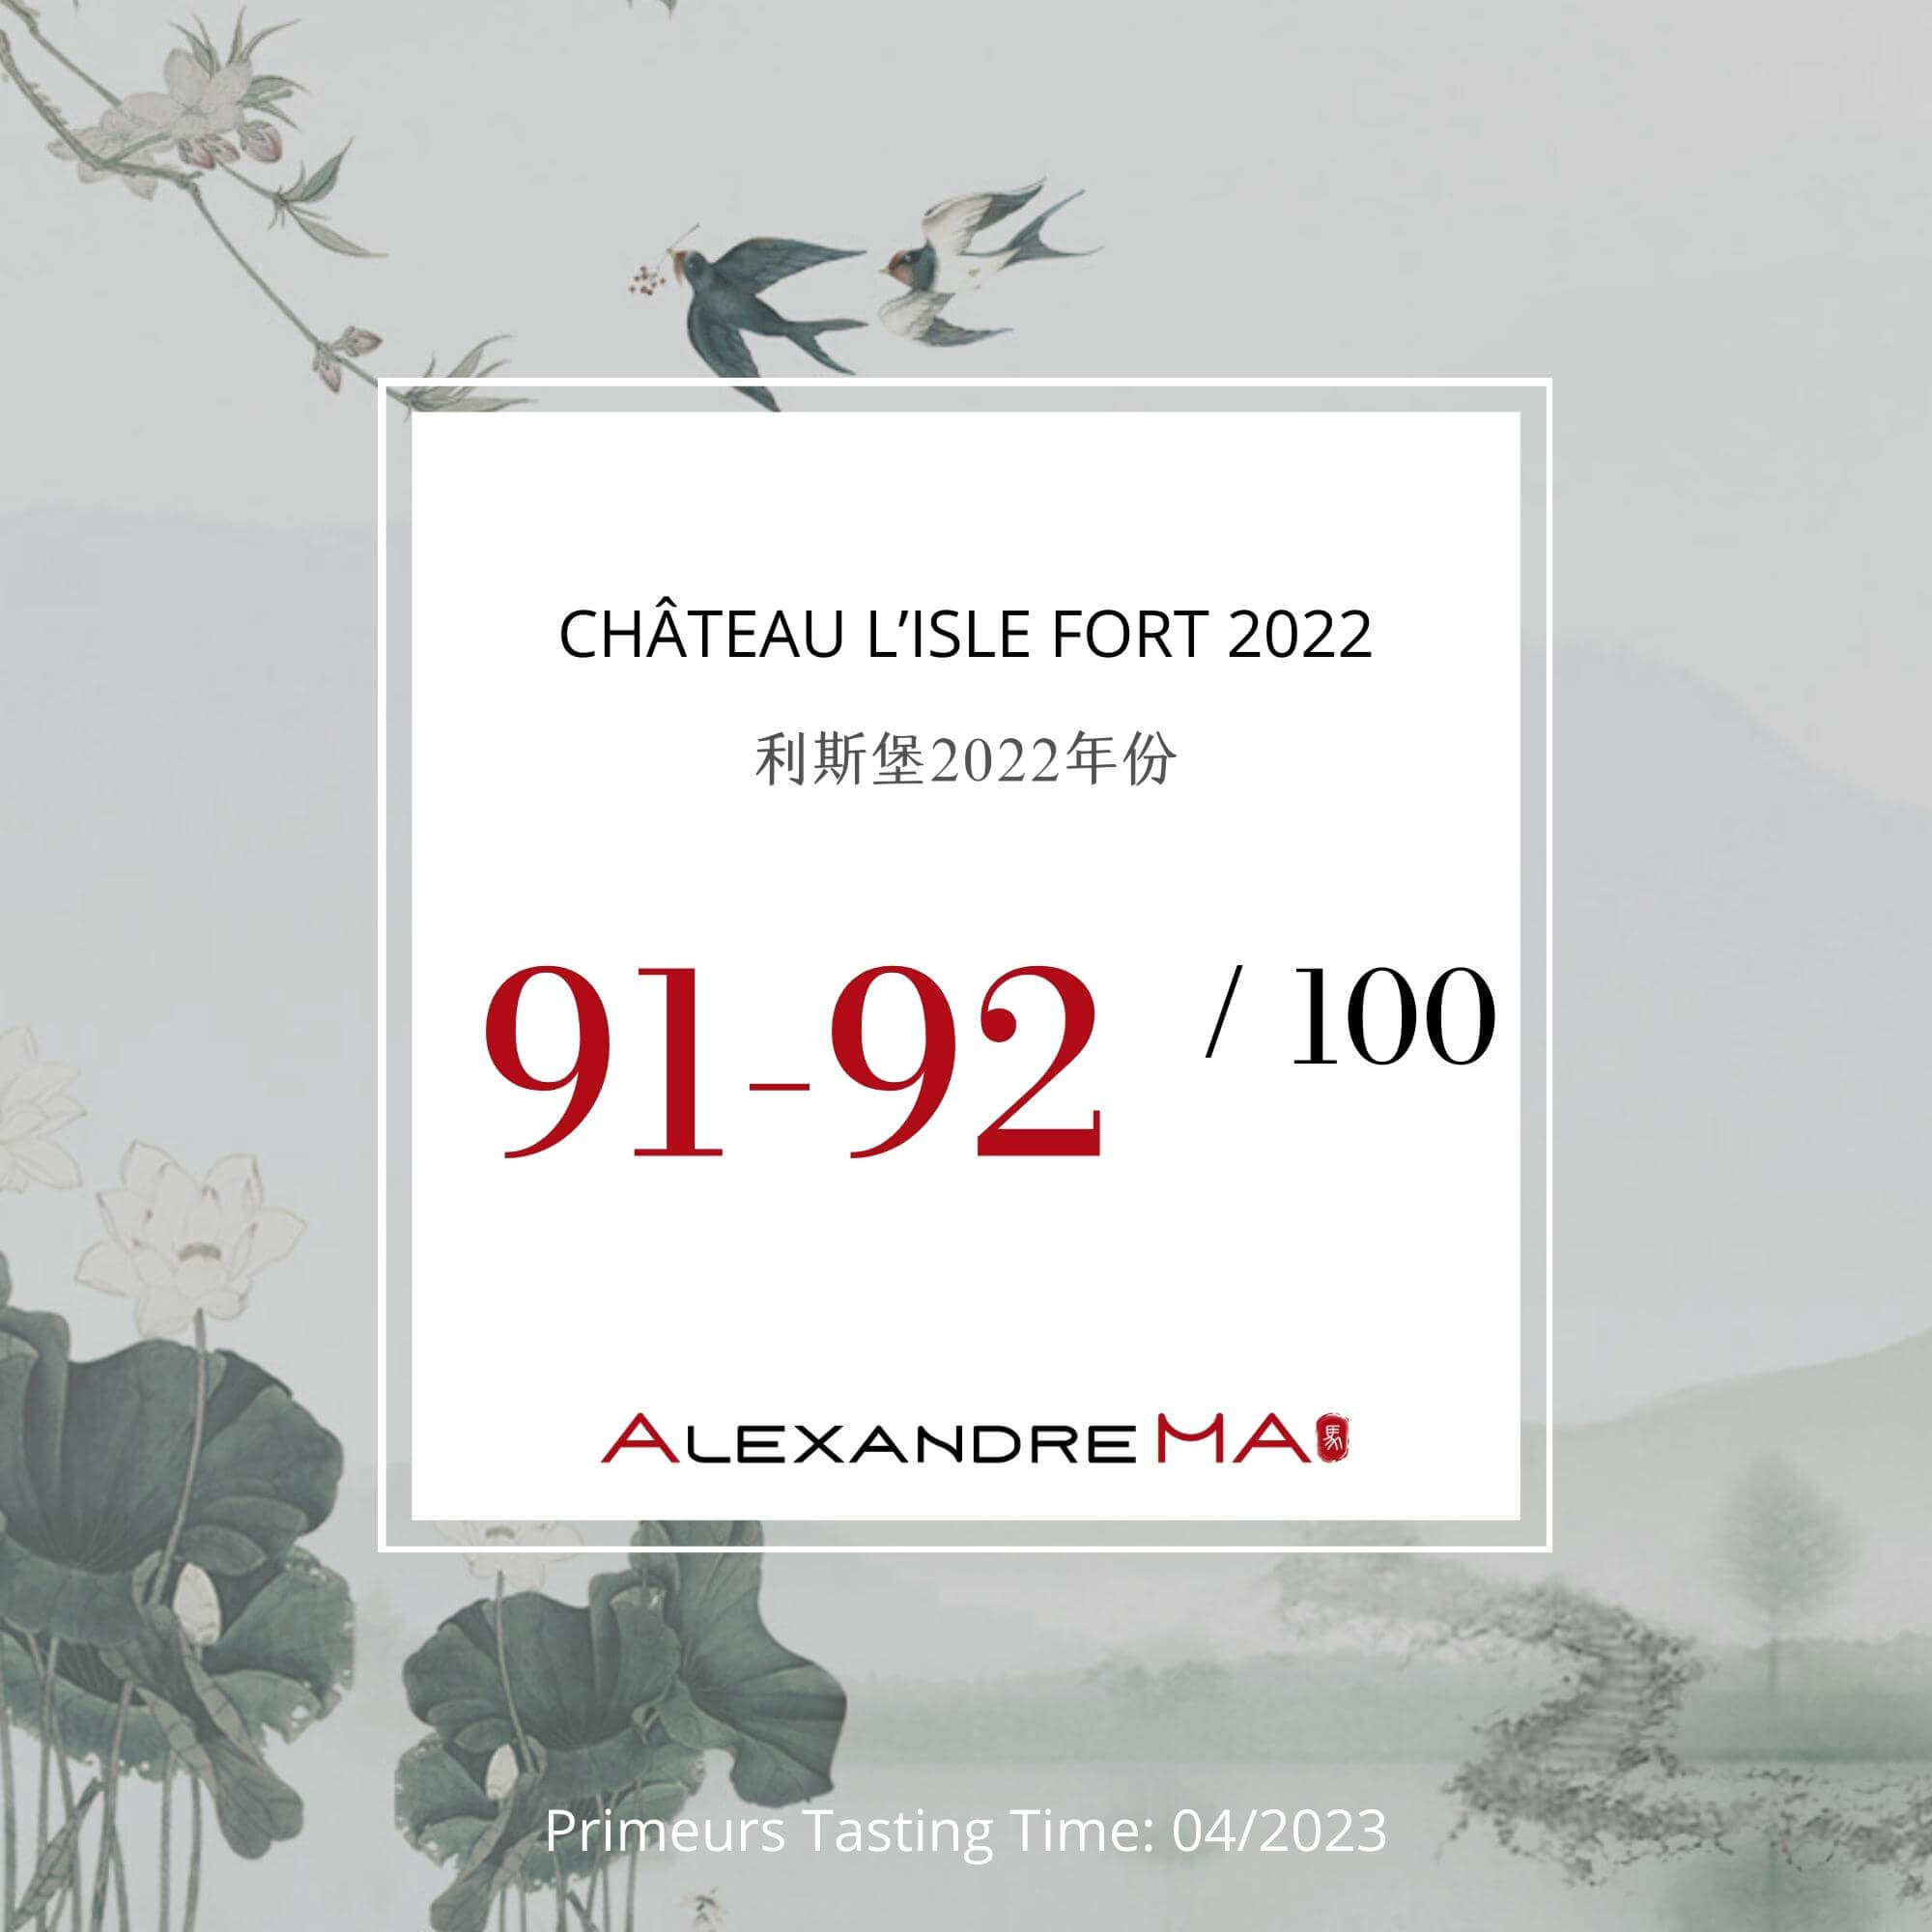 Château l’Isle Fort 2022 Primeurs - Alexandre MA